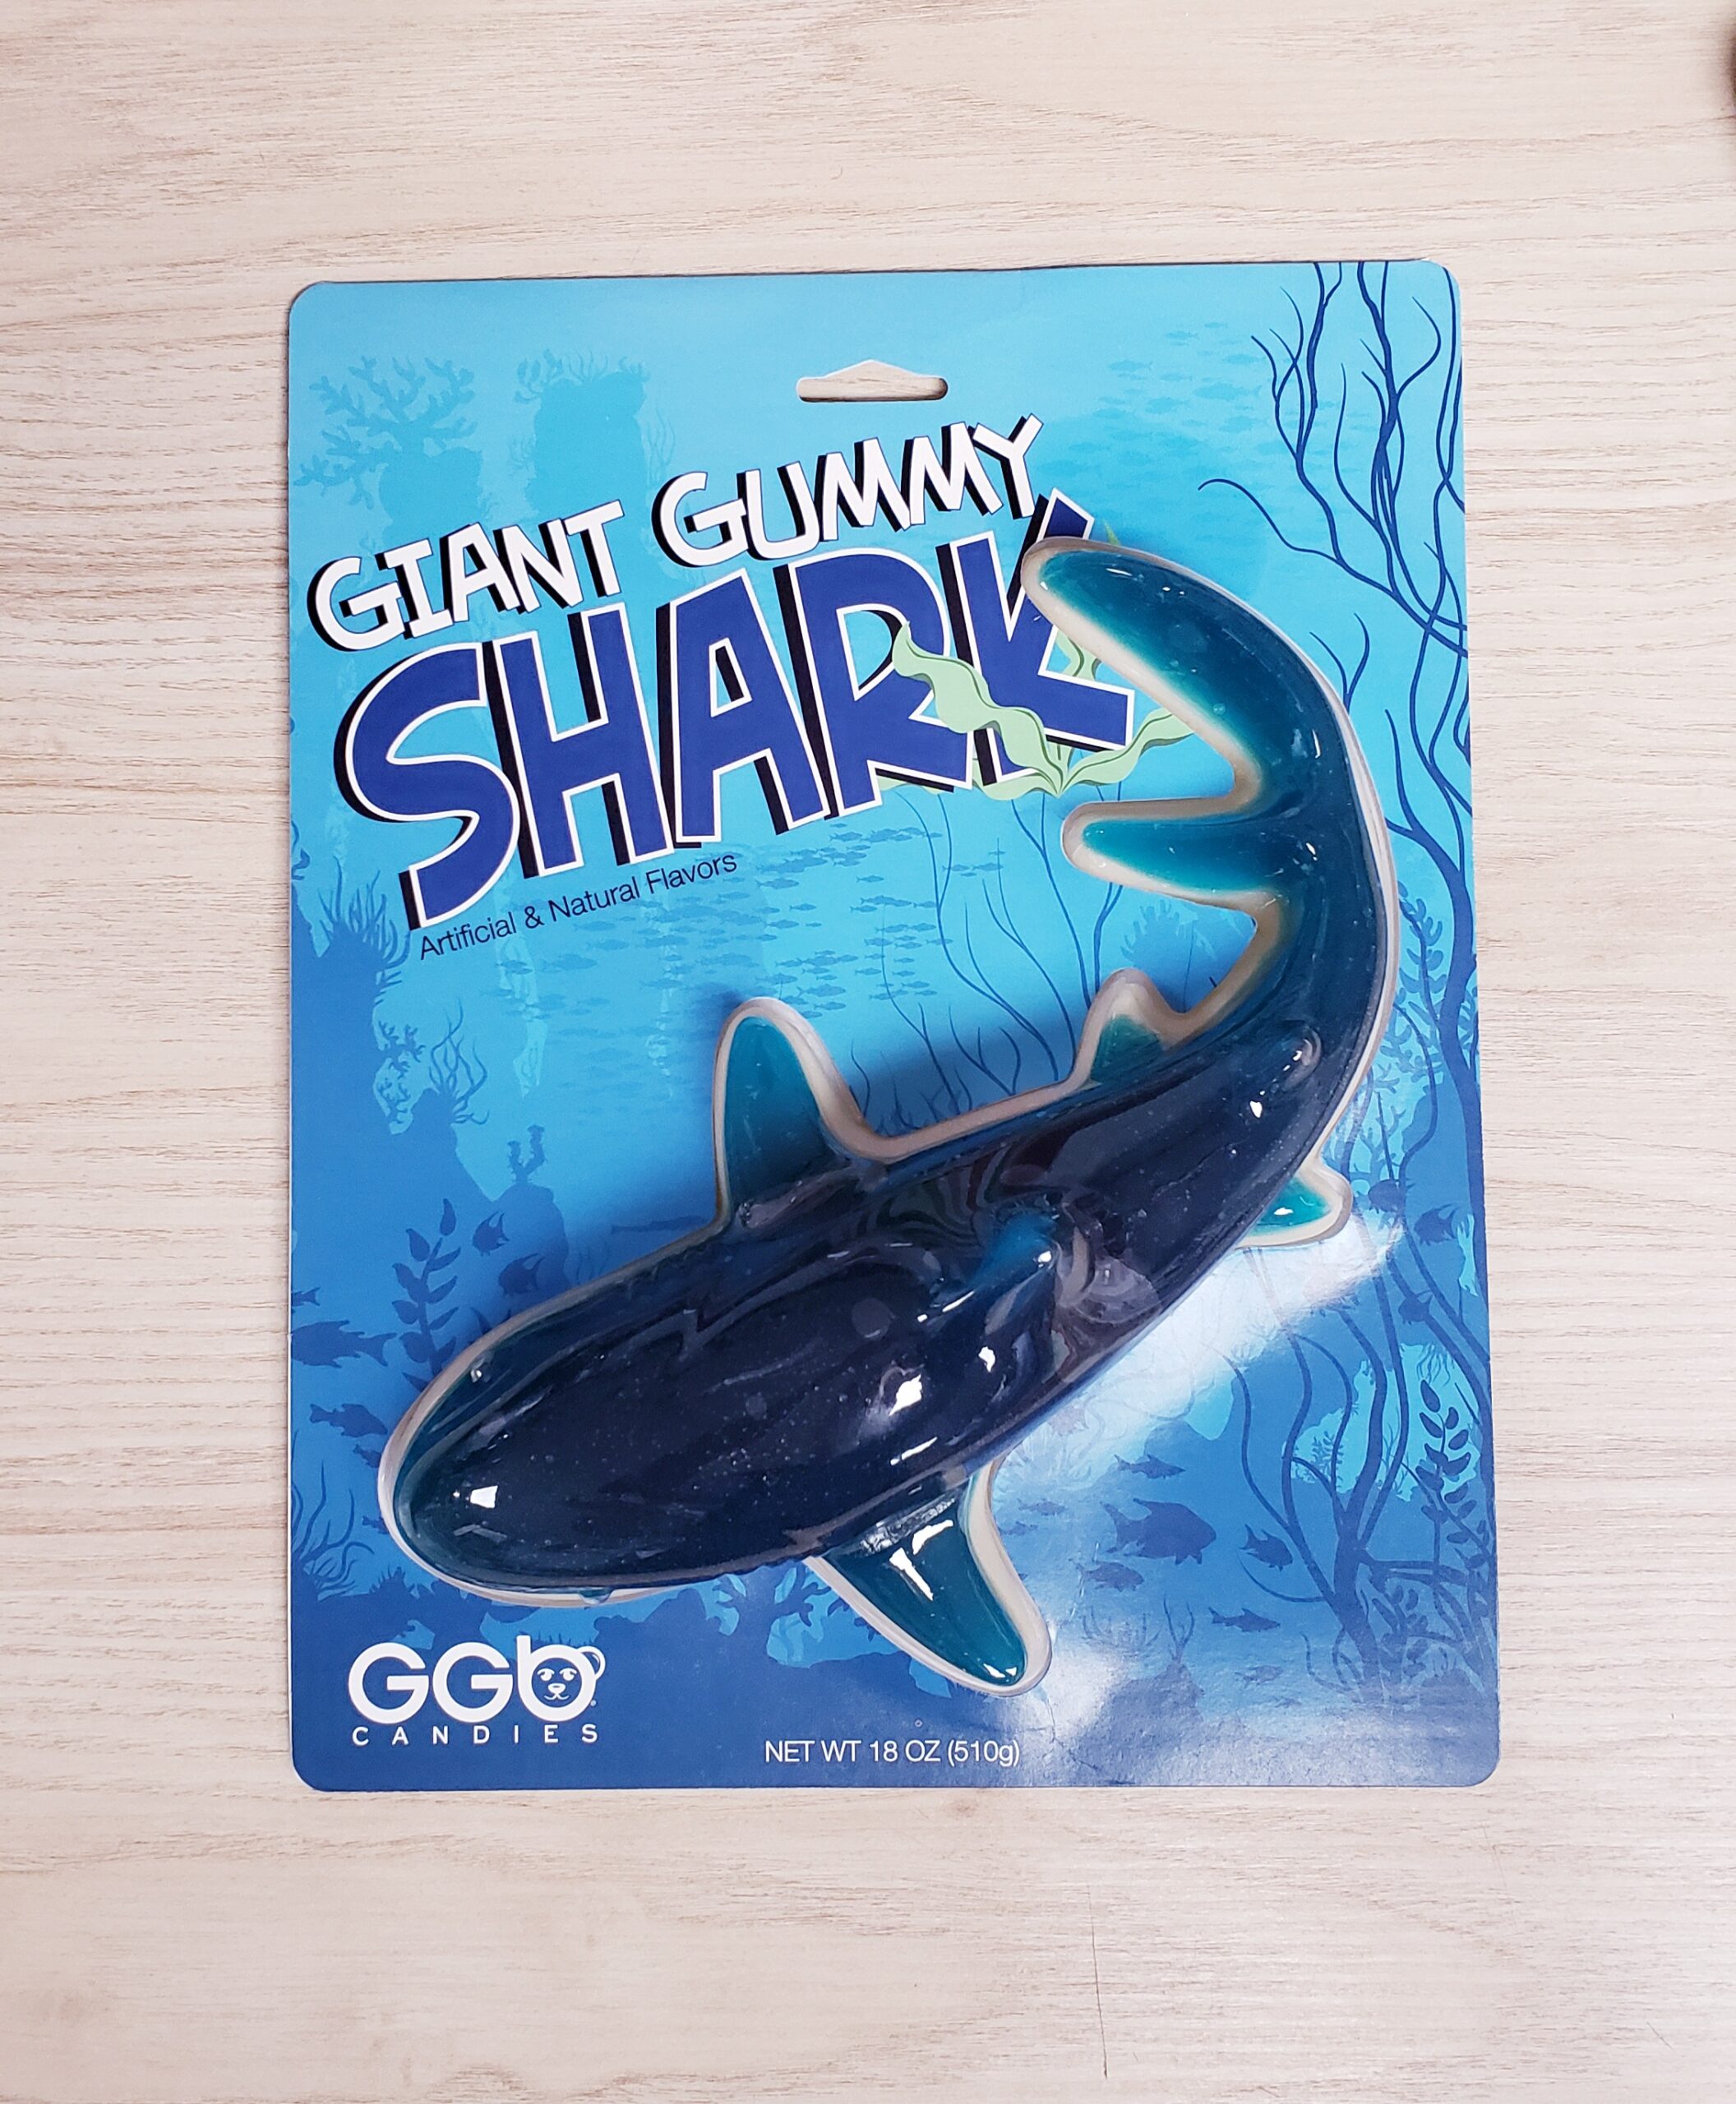 Giant Gummy Shark – Crowsnest Candy Company